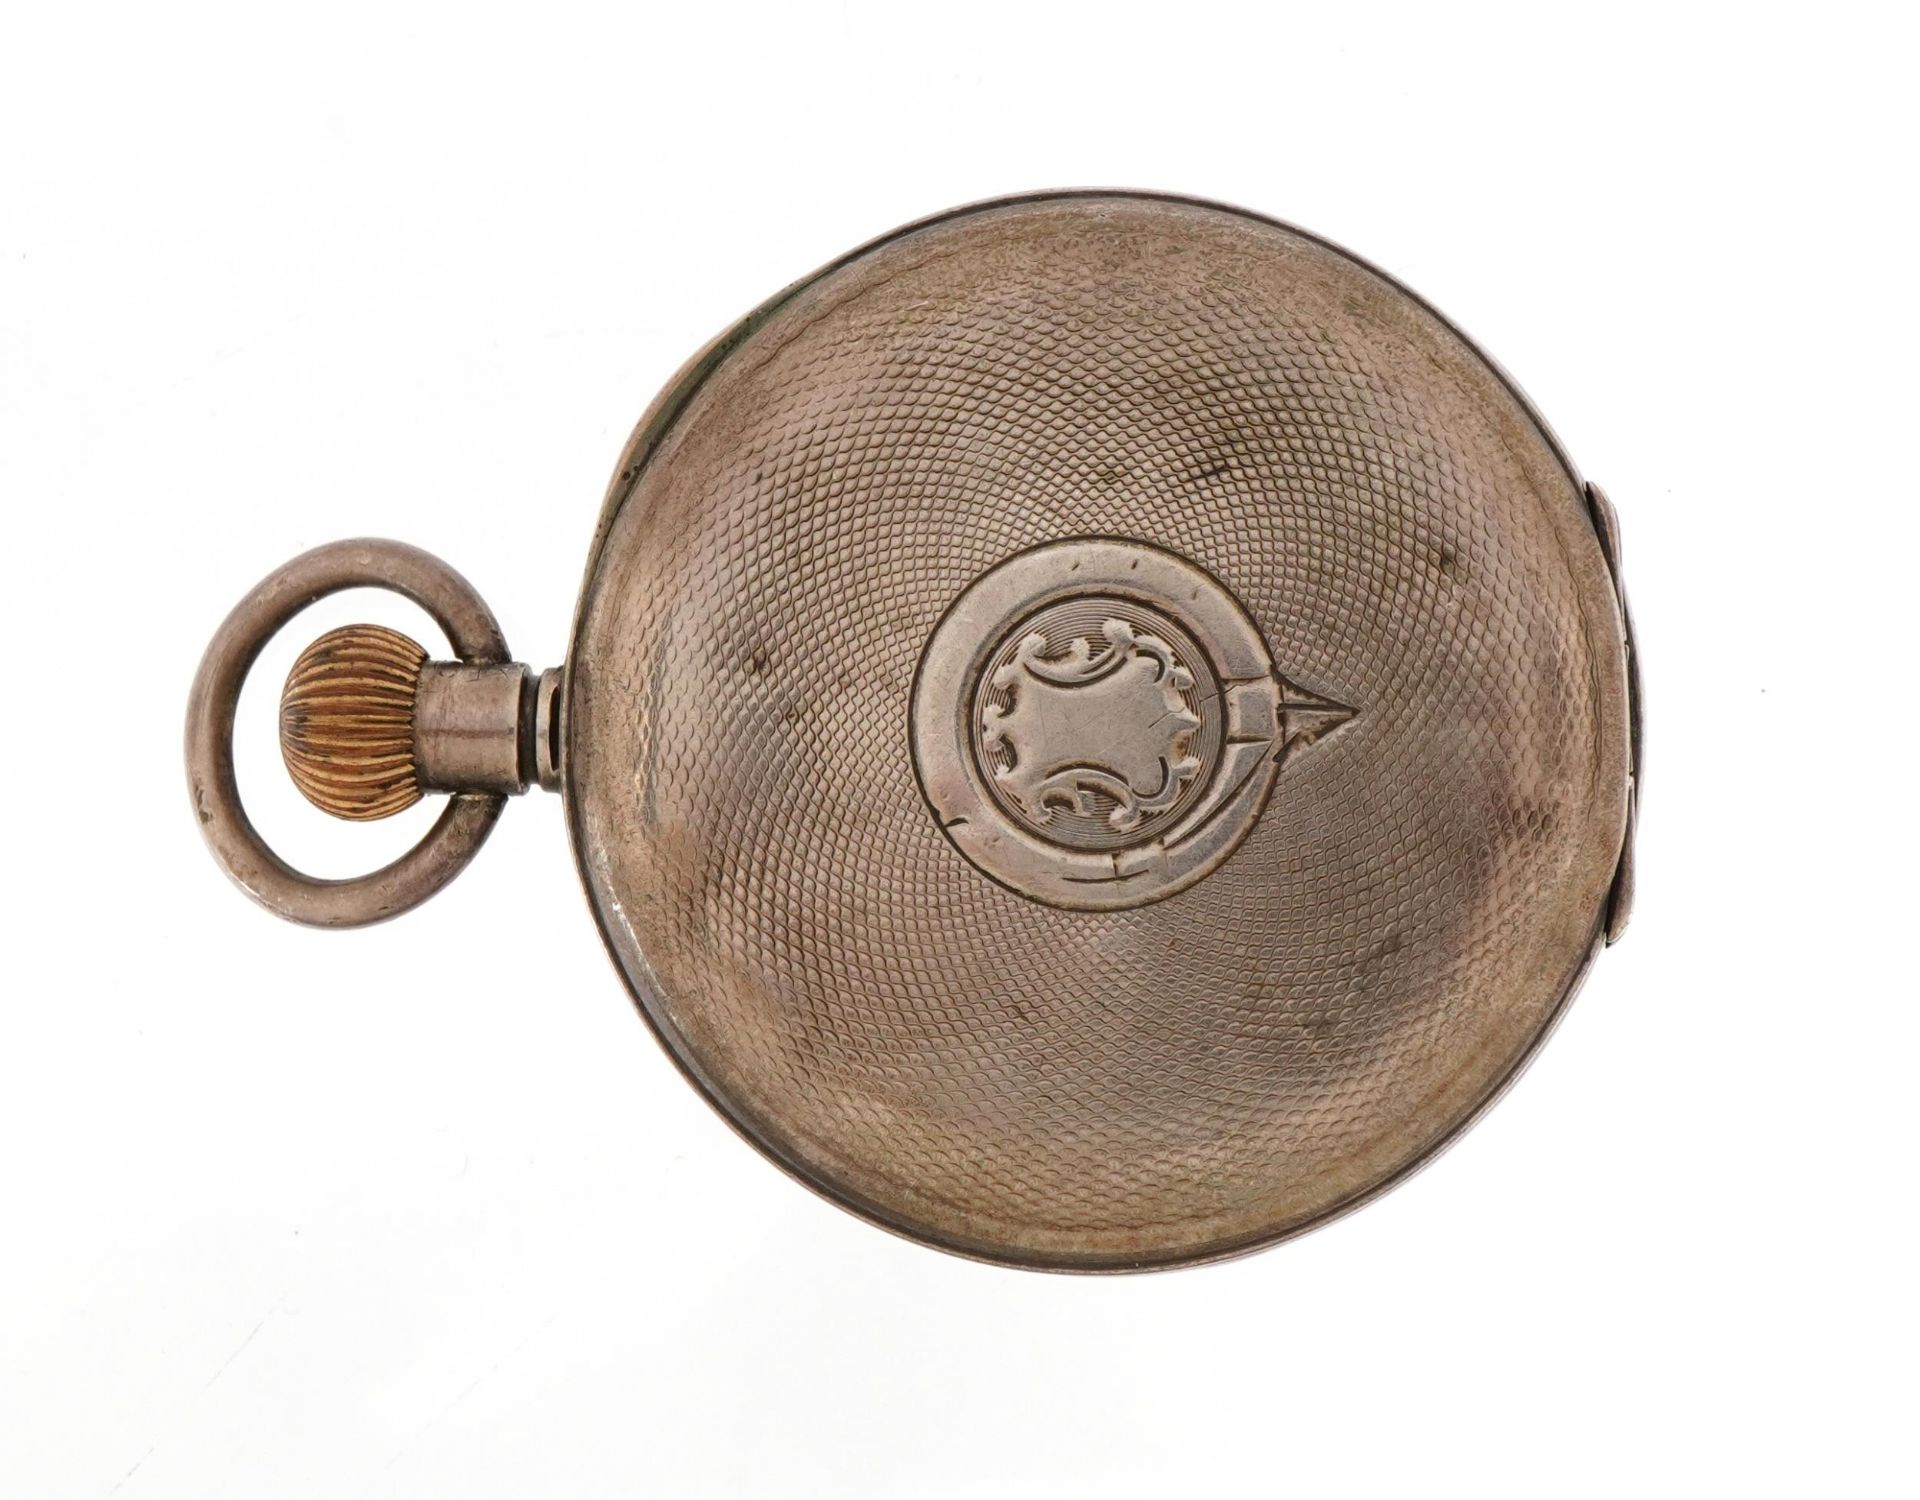 H Samuel, gentlemen's silver half hunter pocket watch, the case numbered 569654, London import - Image 3 of 6